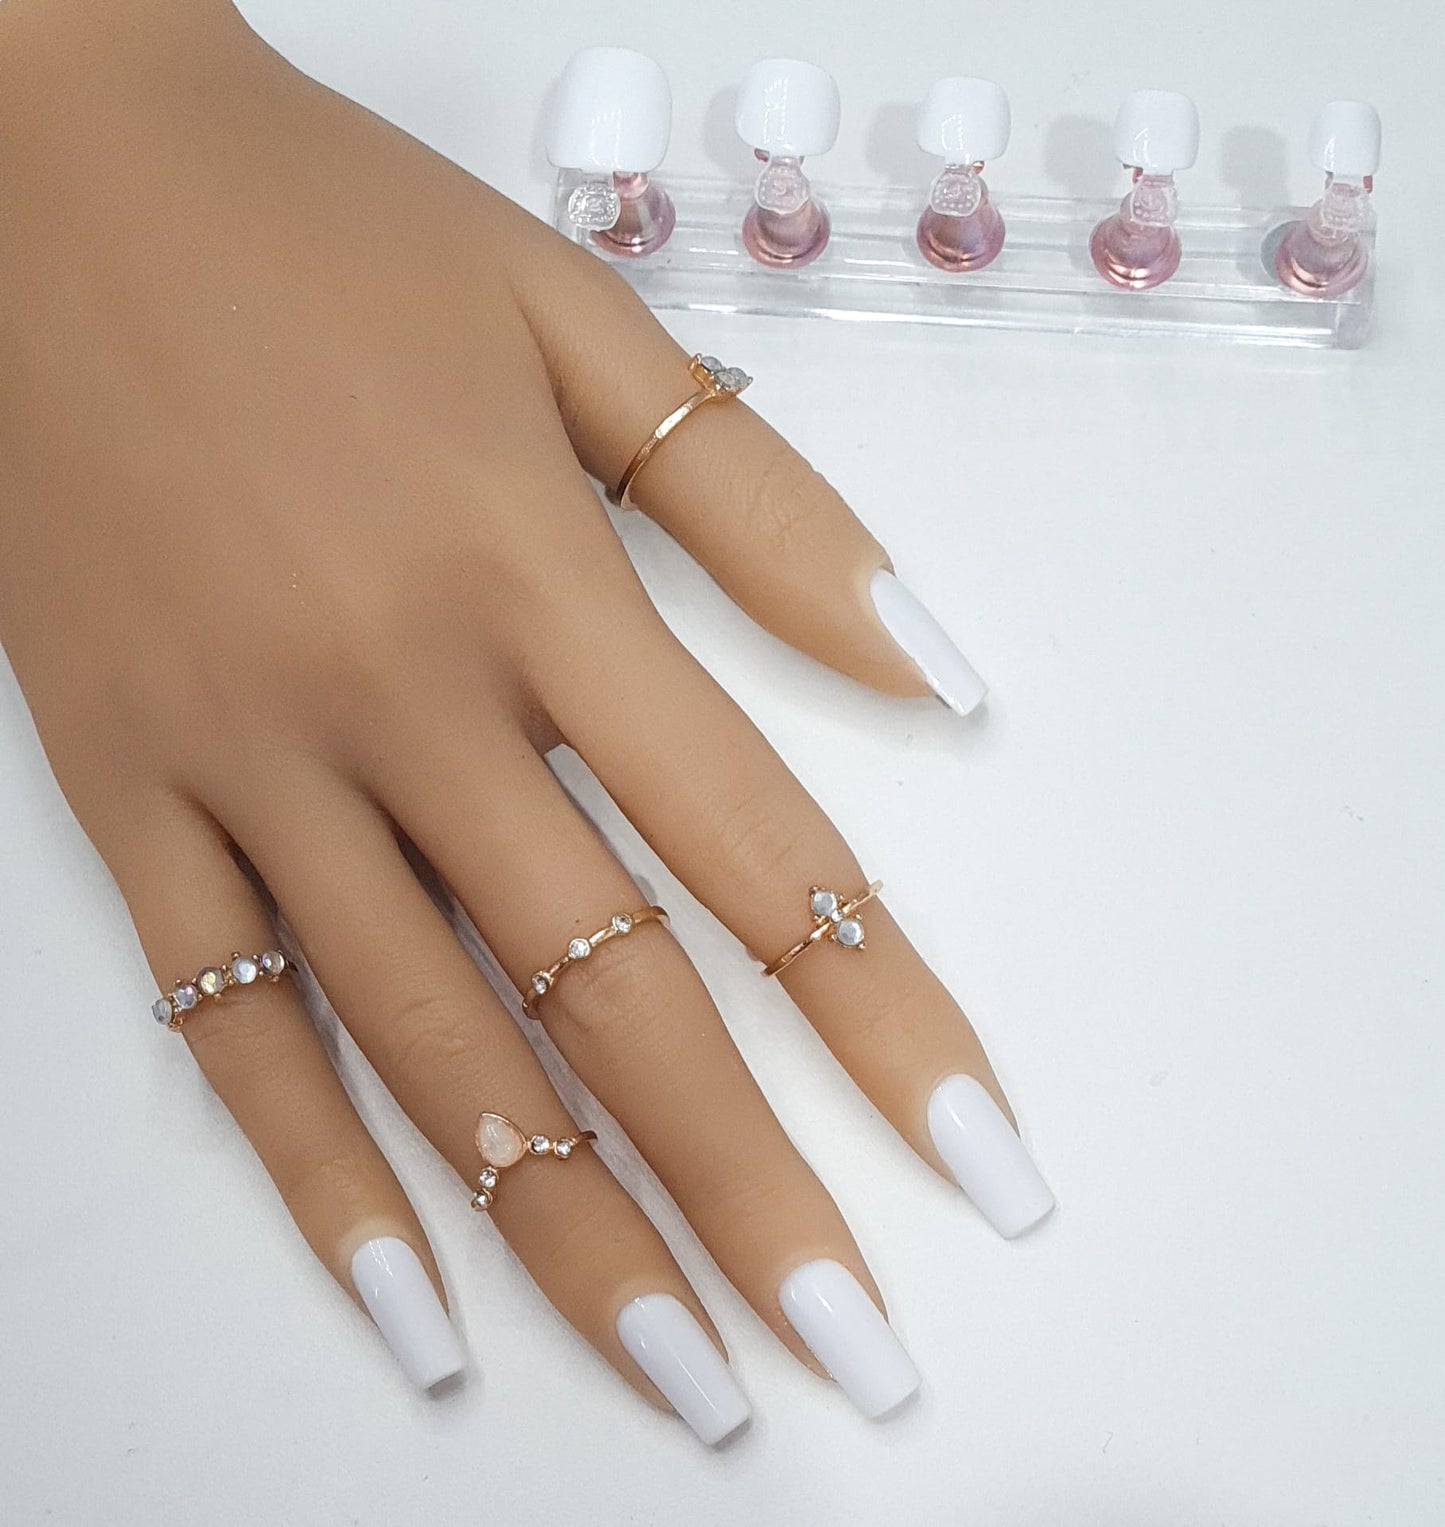 false nails medium square nails shape in basic plain white base with false toe nails